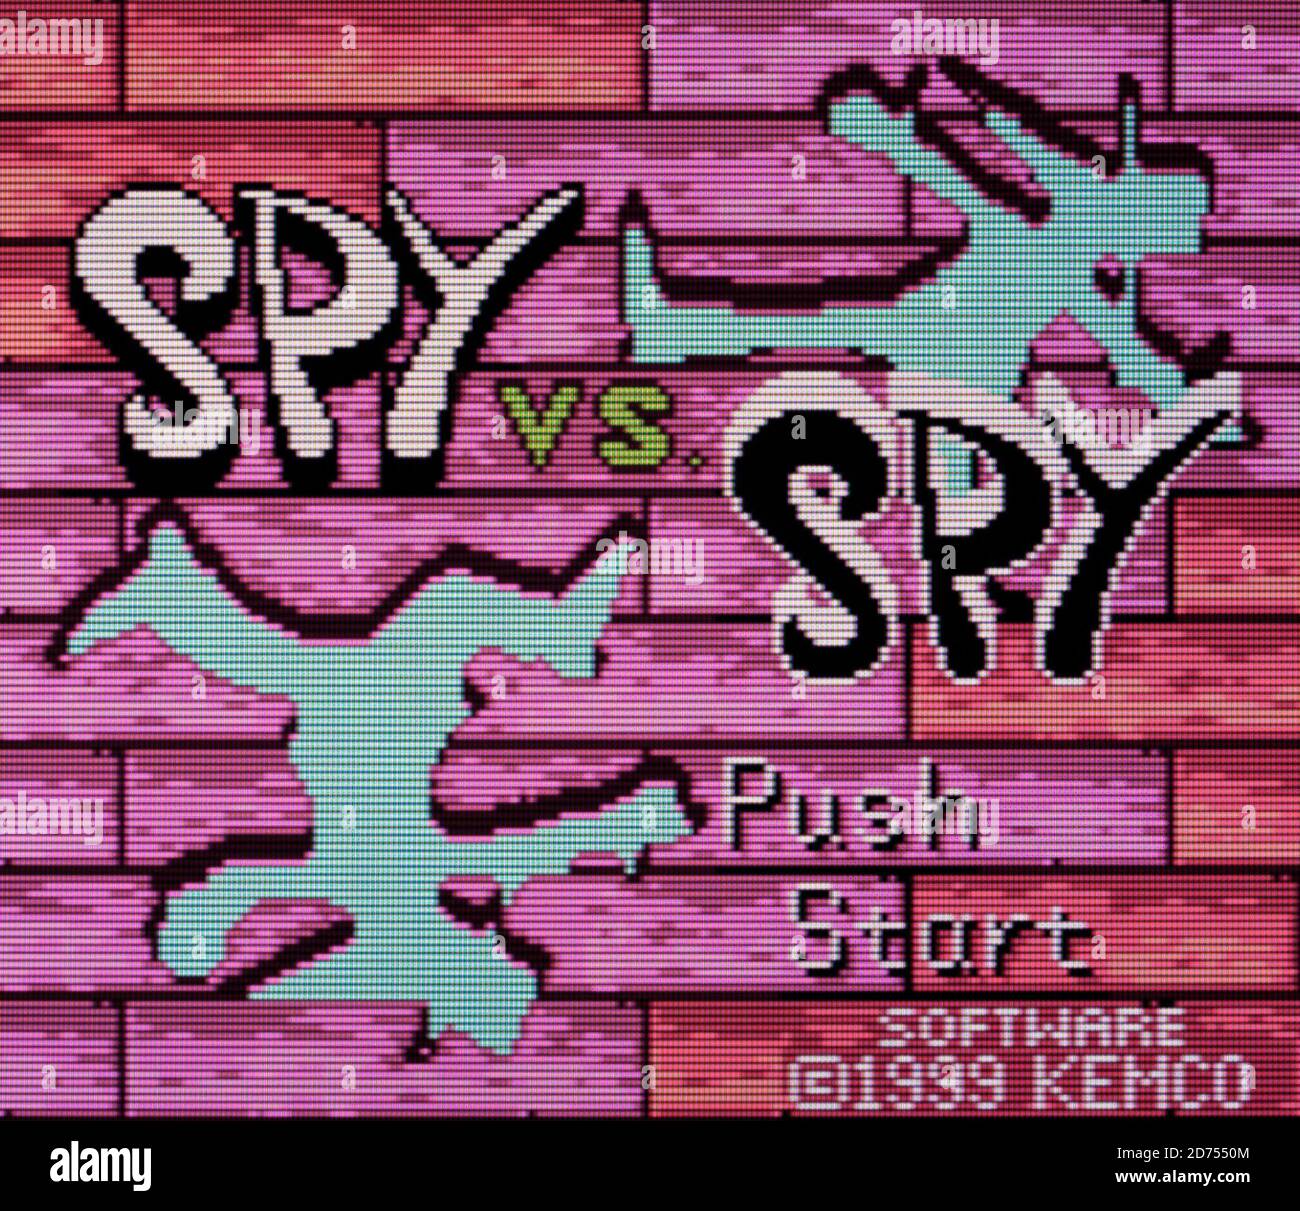 Spy vs Spy - Nintendo Game Boy Color Videogame - Editorial use only Stock  Photo - Alamy